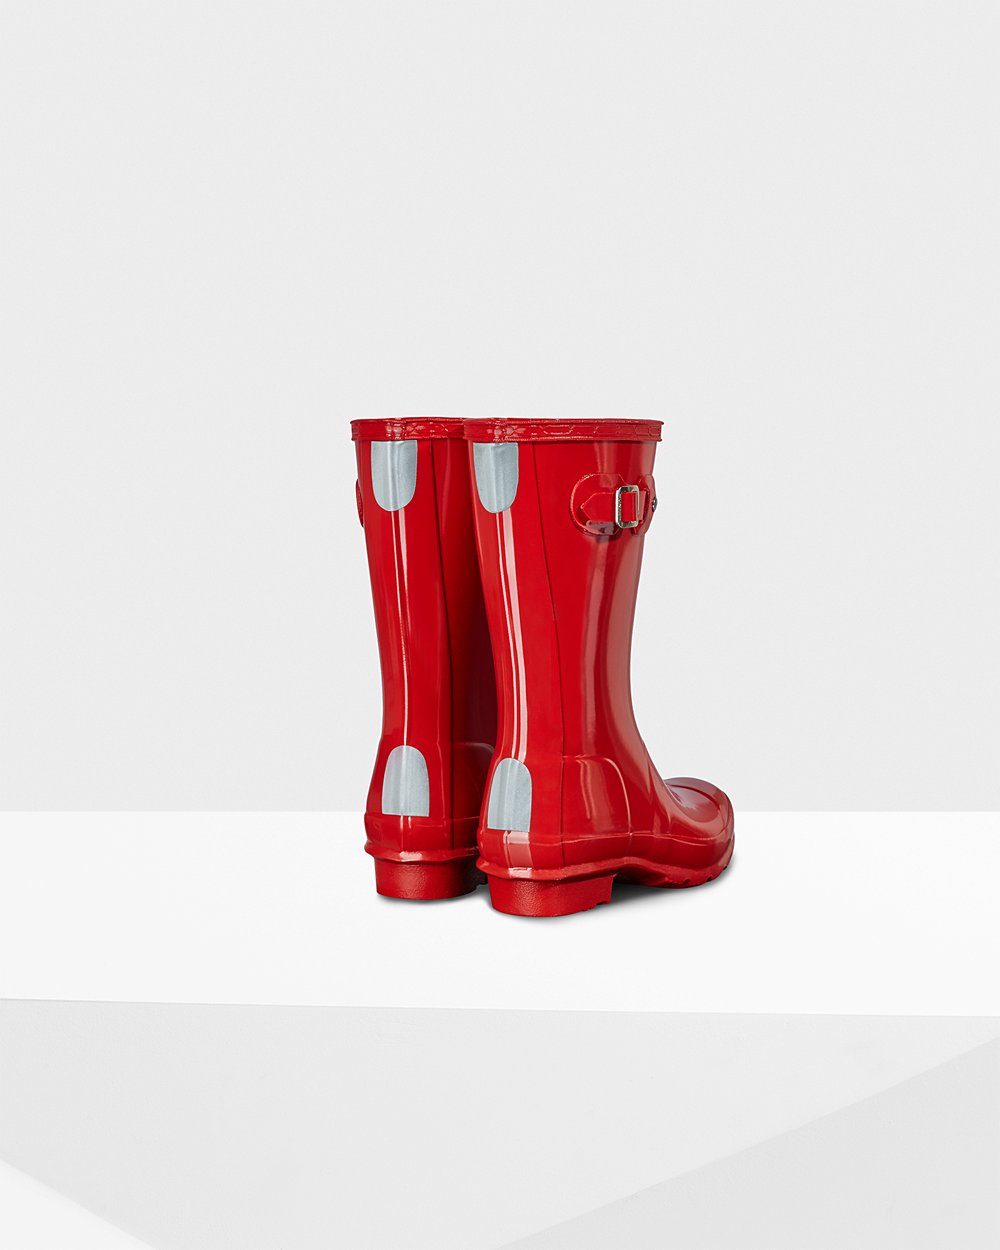 Kids Rain Boots - Hunter Original Big Gloss (89ETGZKRQ) - Red